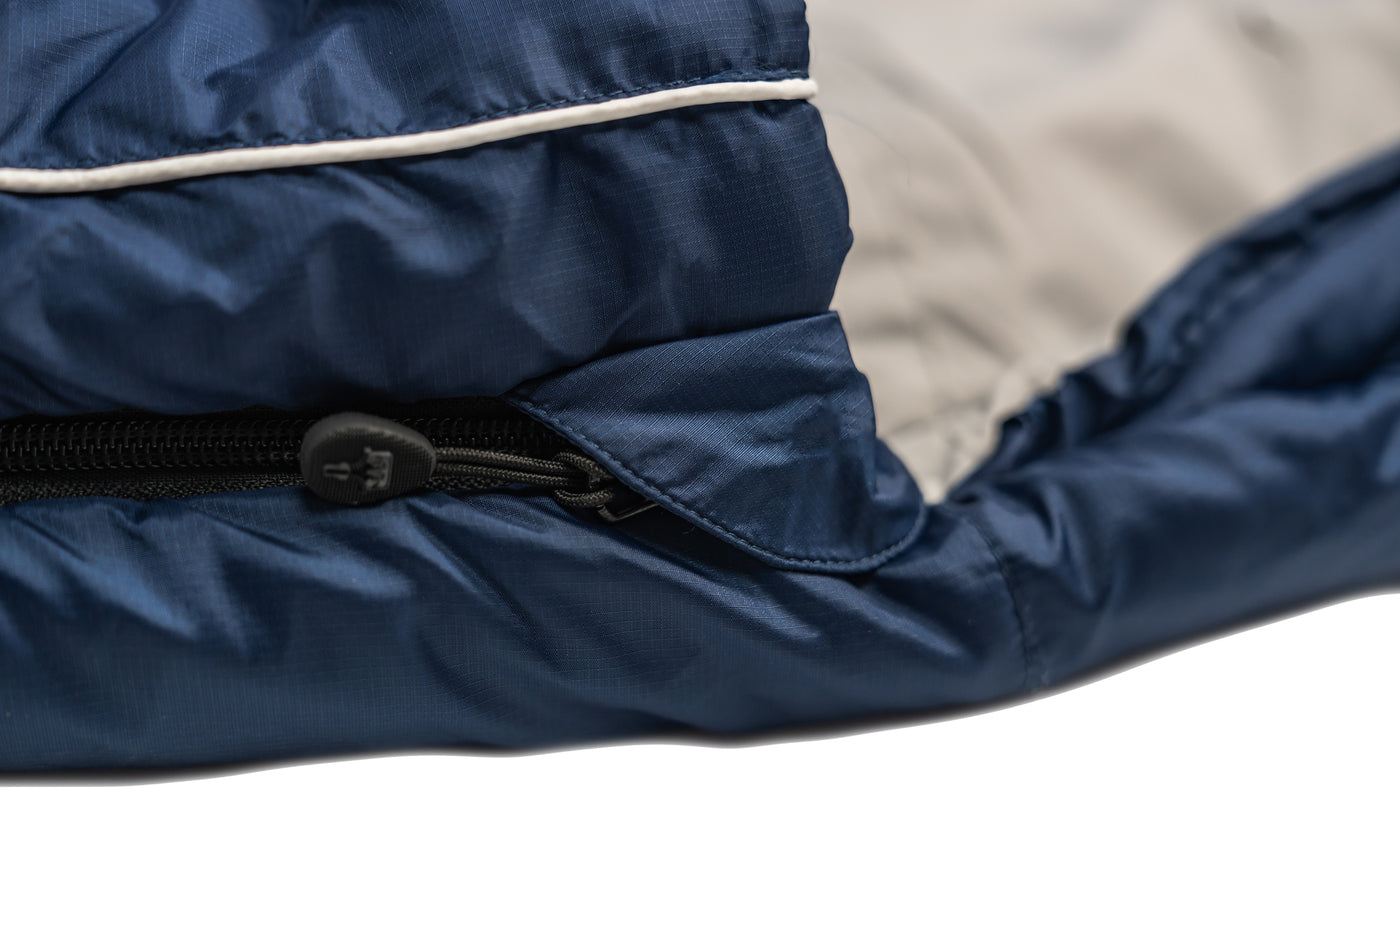 Grüezi bag Komfortschlafsack Biopod Wolle Murmeltier Comfort XXL - Reißverschlussabdeckung